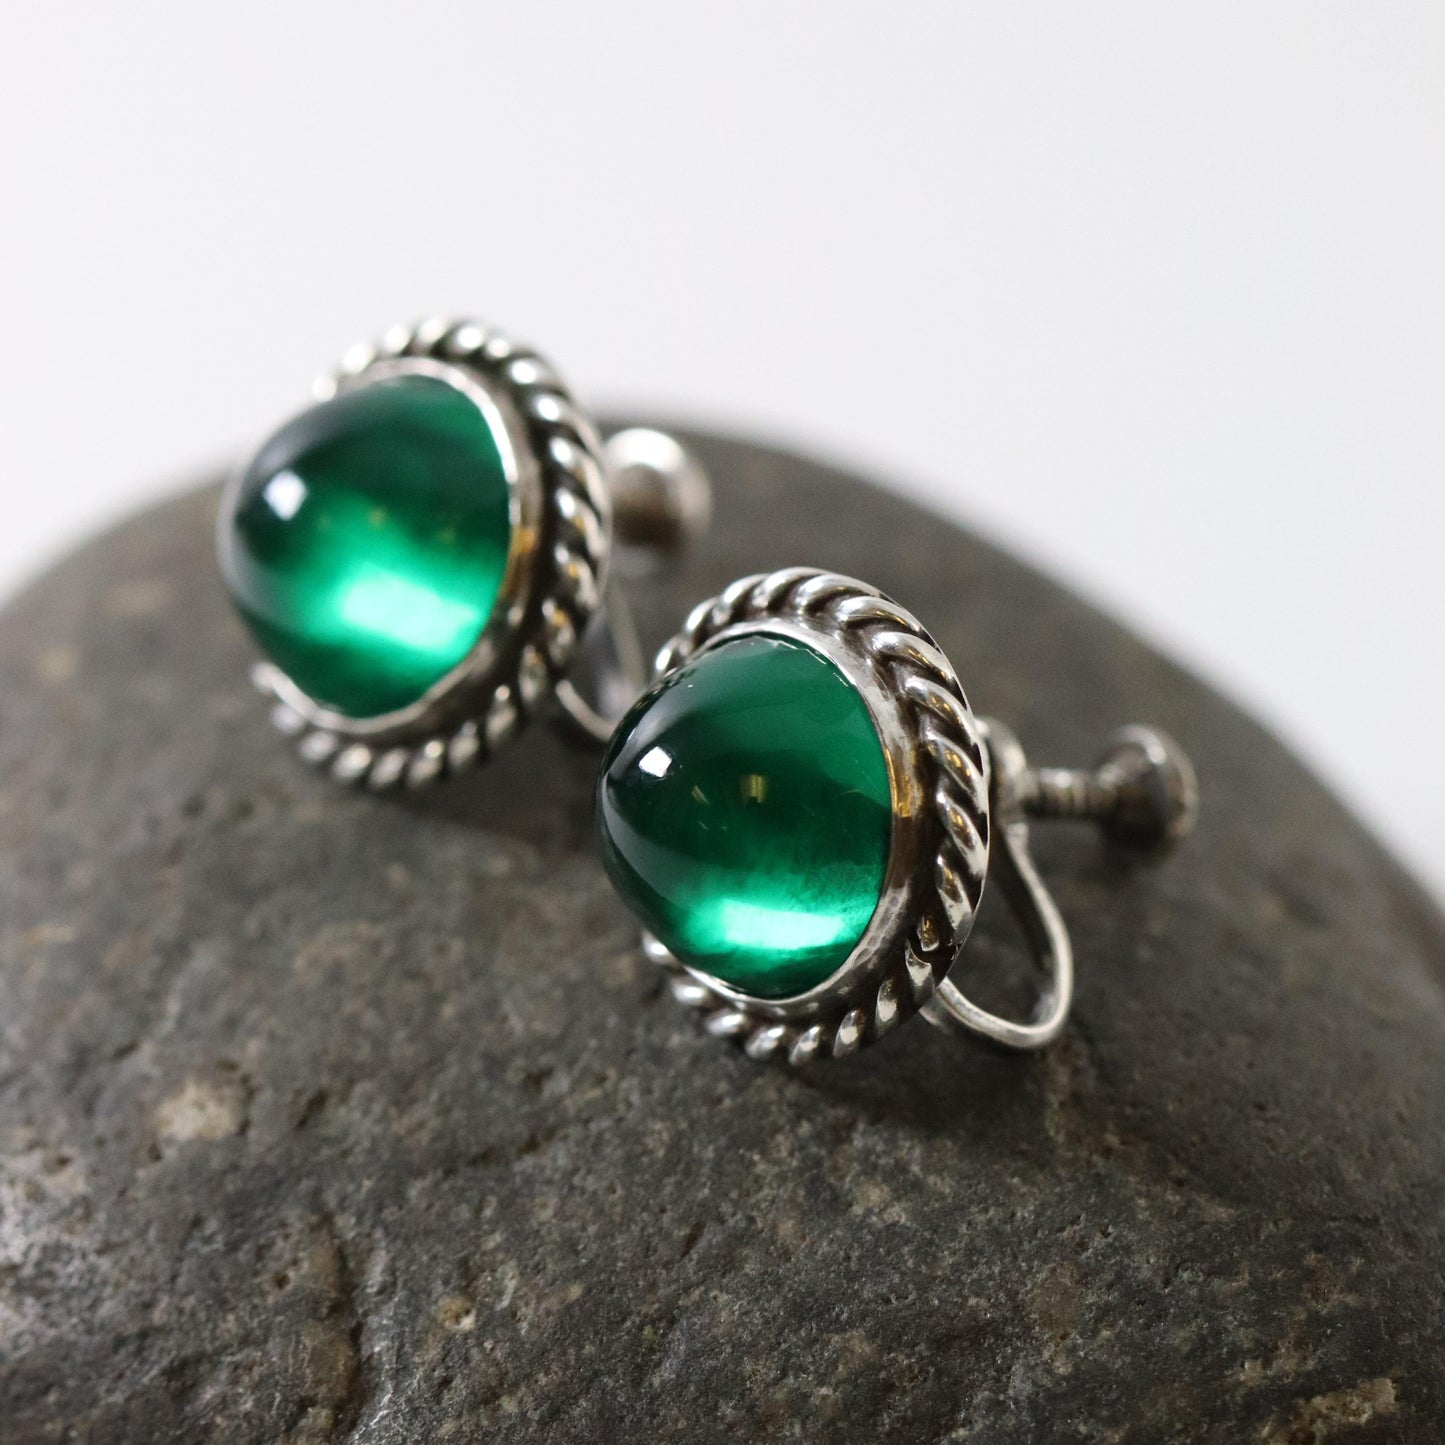 Vintage Los Castillo Taxco Silver Mexican Jewelry | Mid-Century Green Glass Earrings - Carmel Fine Silver Jewelry